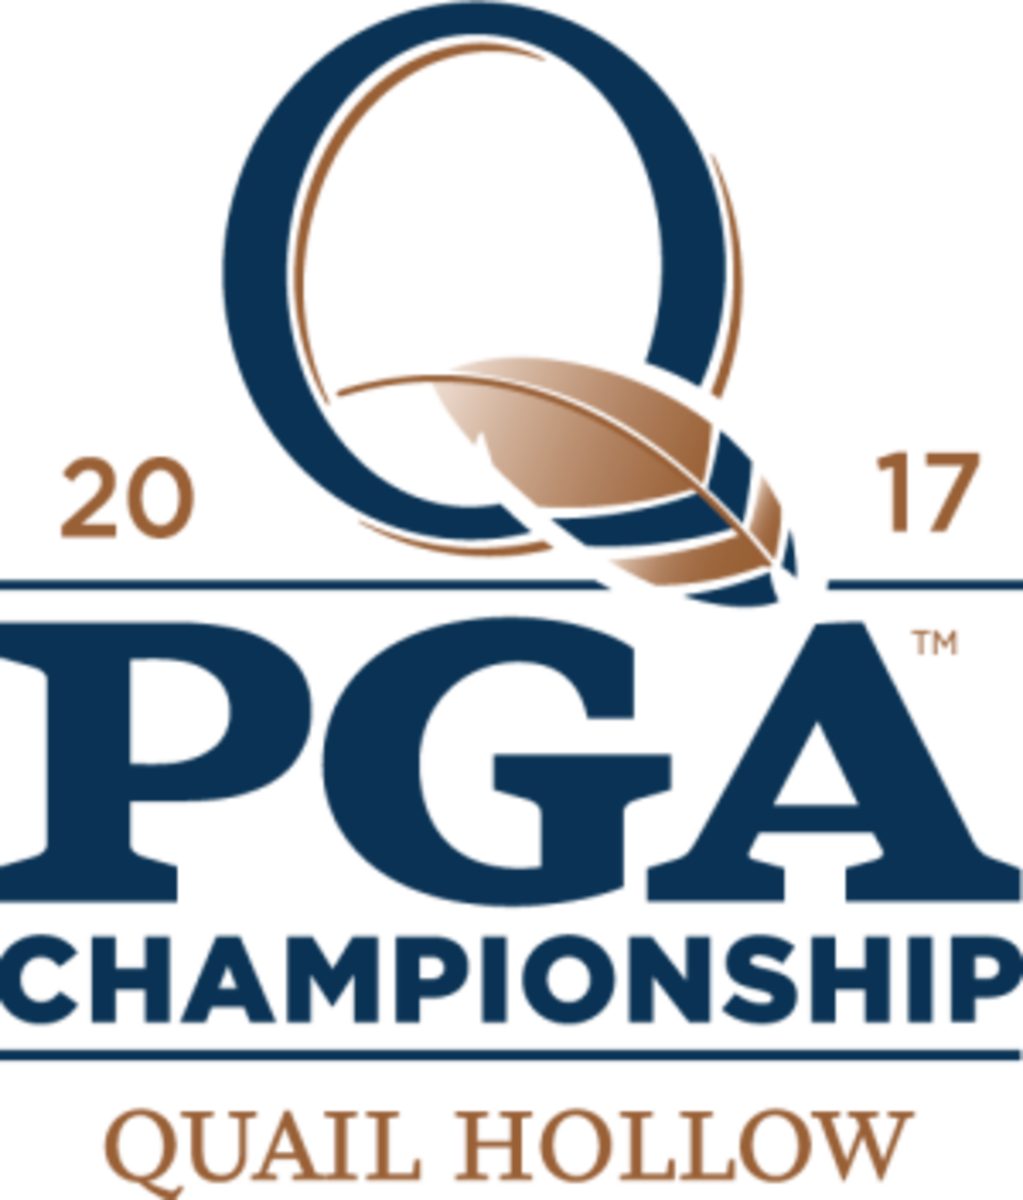 PGA Championship logo for our fantasy golf picks